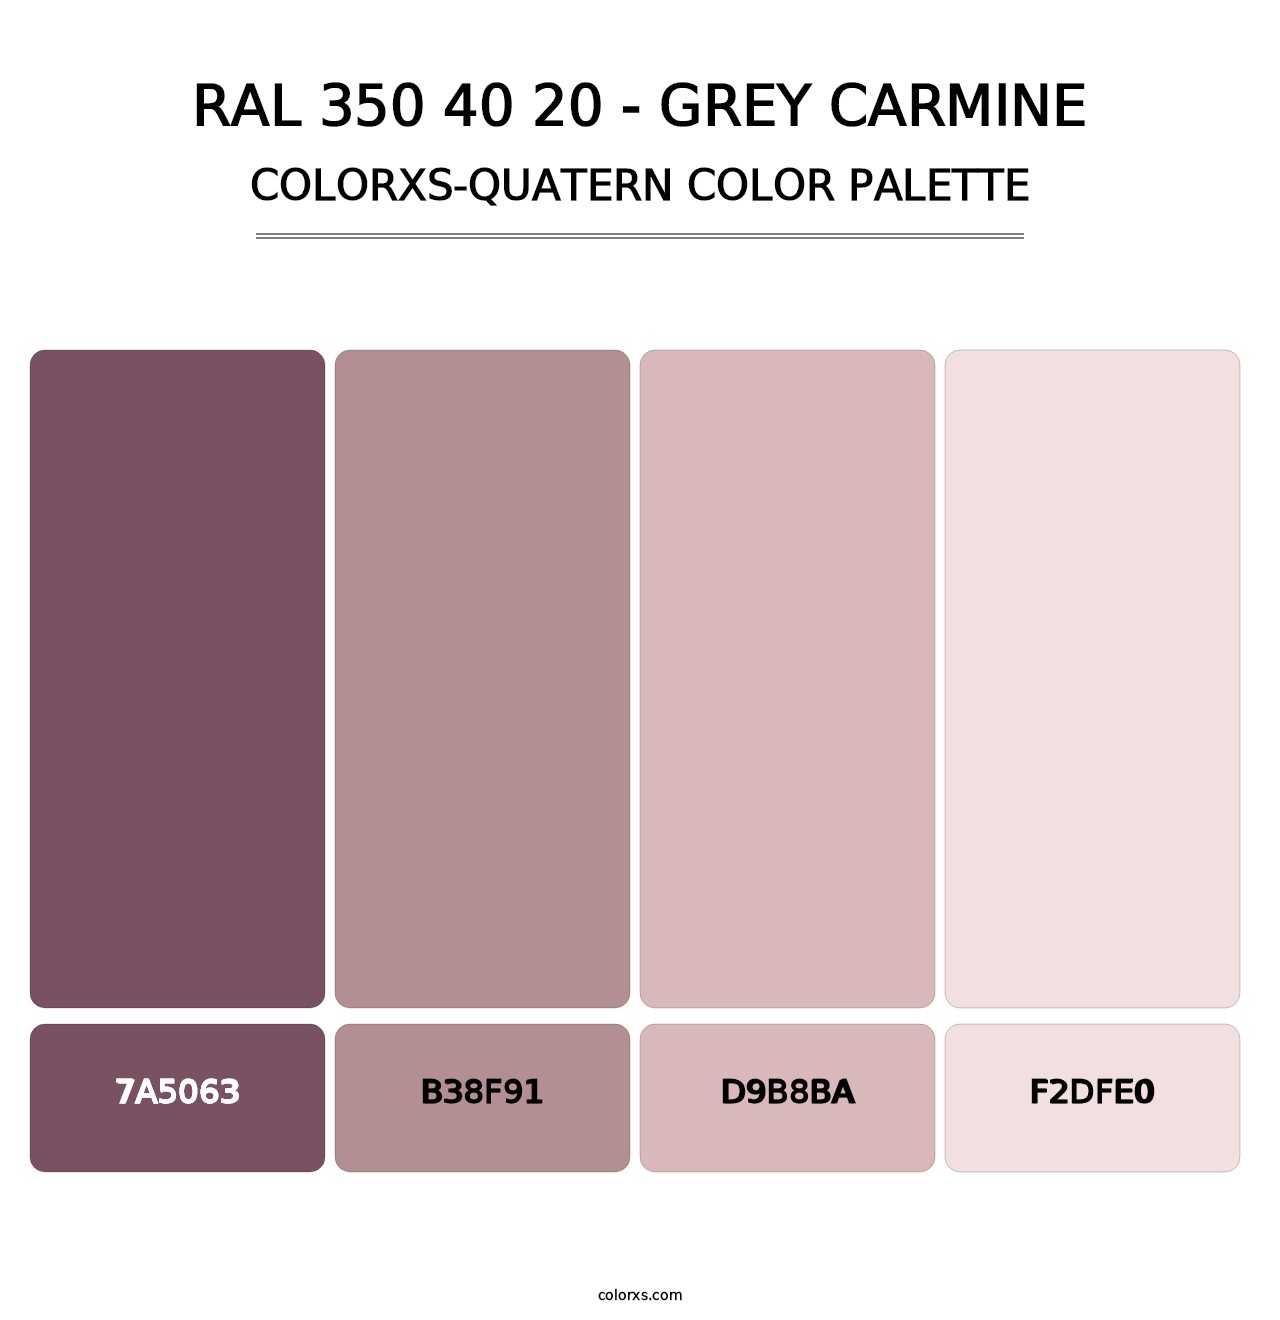 RAL 350 40 20 - Grey Carmine - Colorxs Quatern Palette